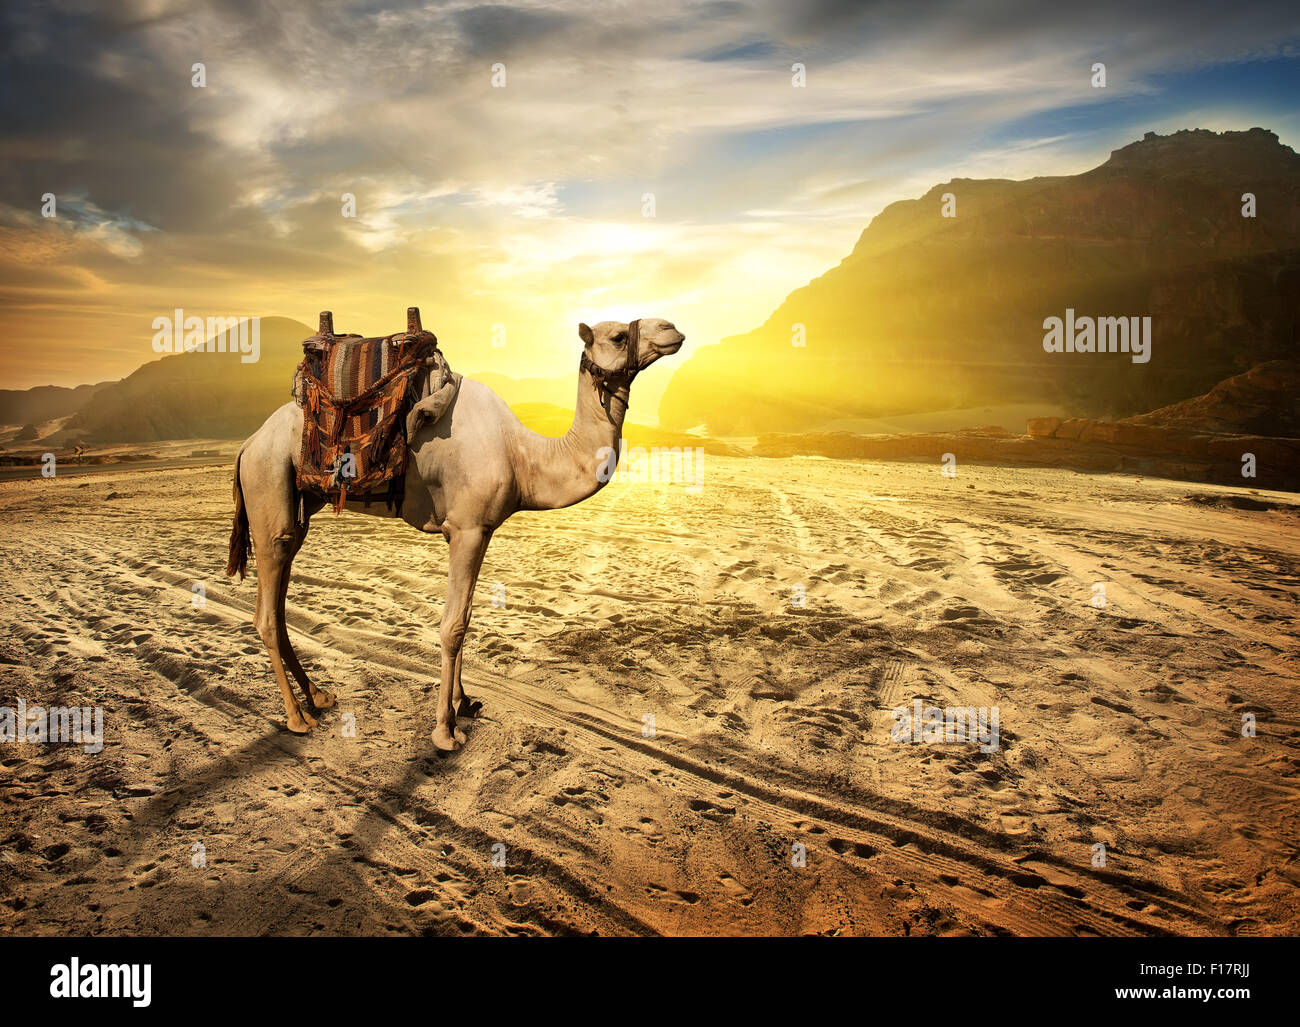 Camel in sandy desert near mountains at sunset Stock Photo